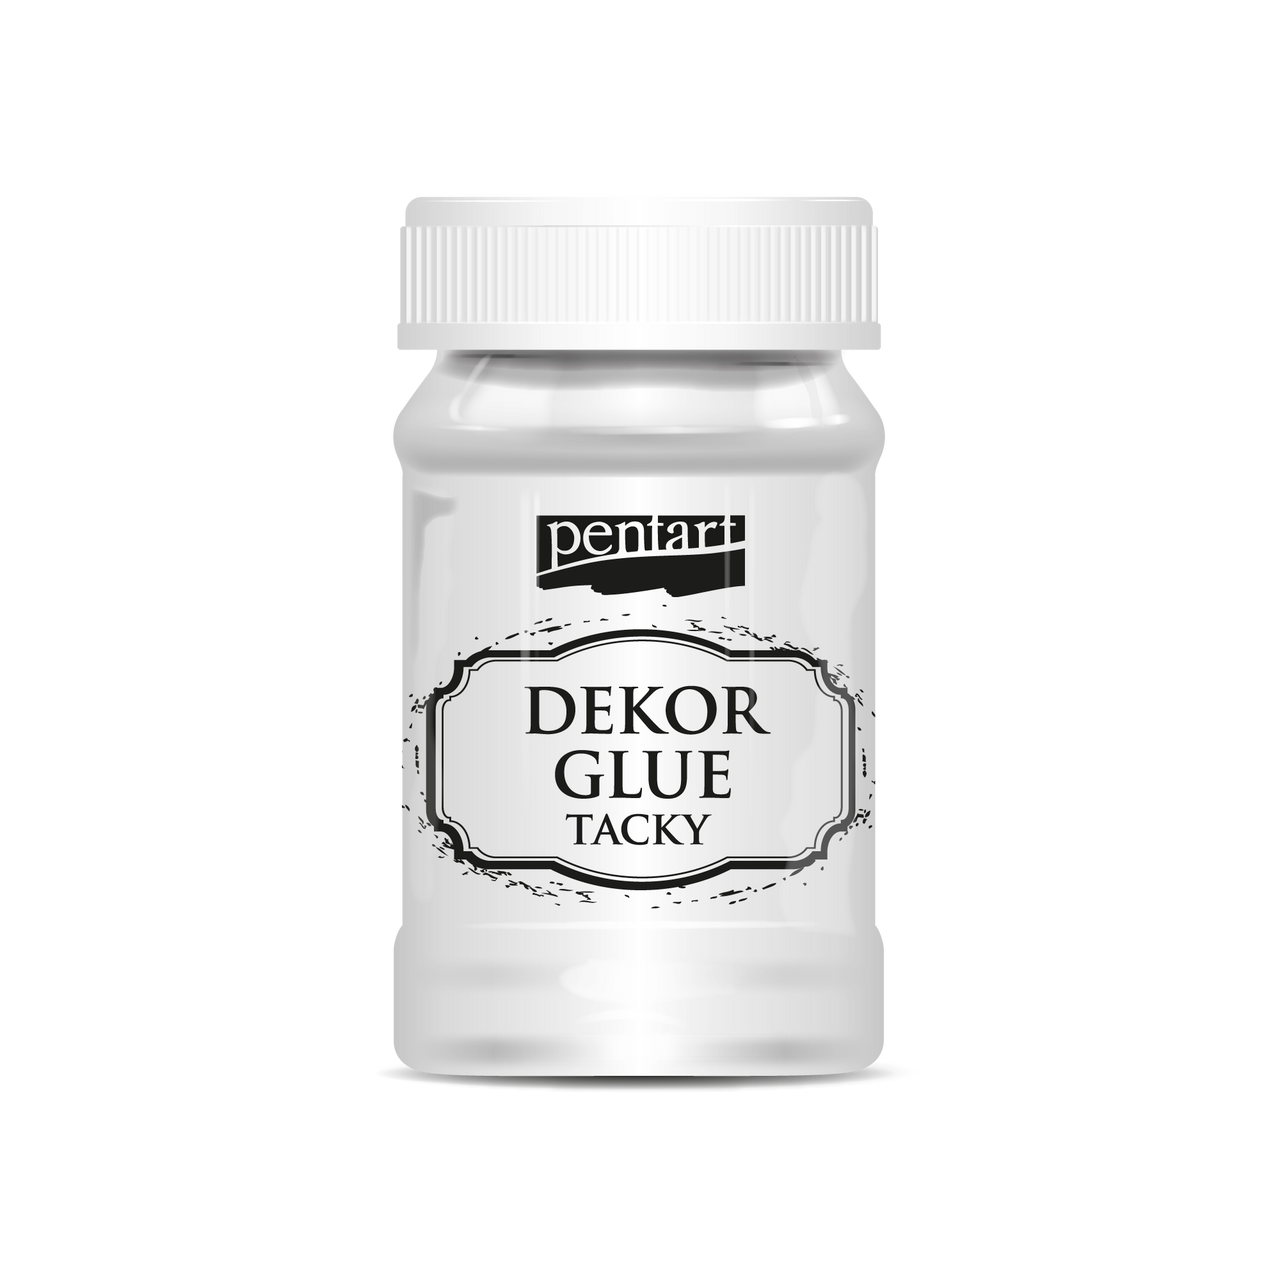 Dekor Glue, Tacky - Decoupage Queen